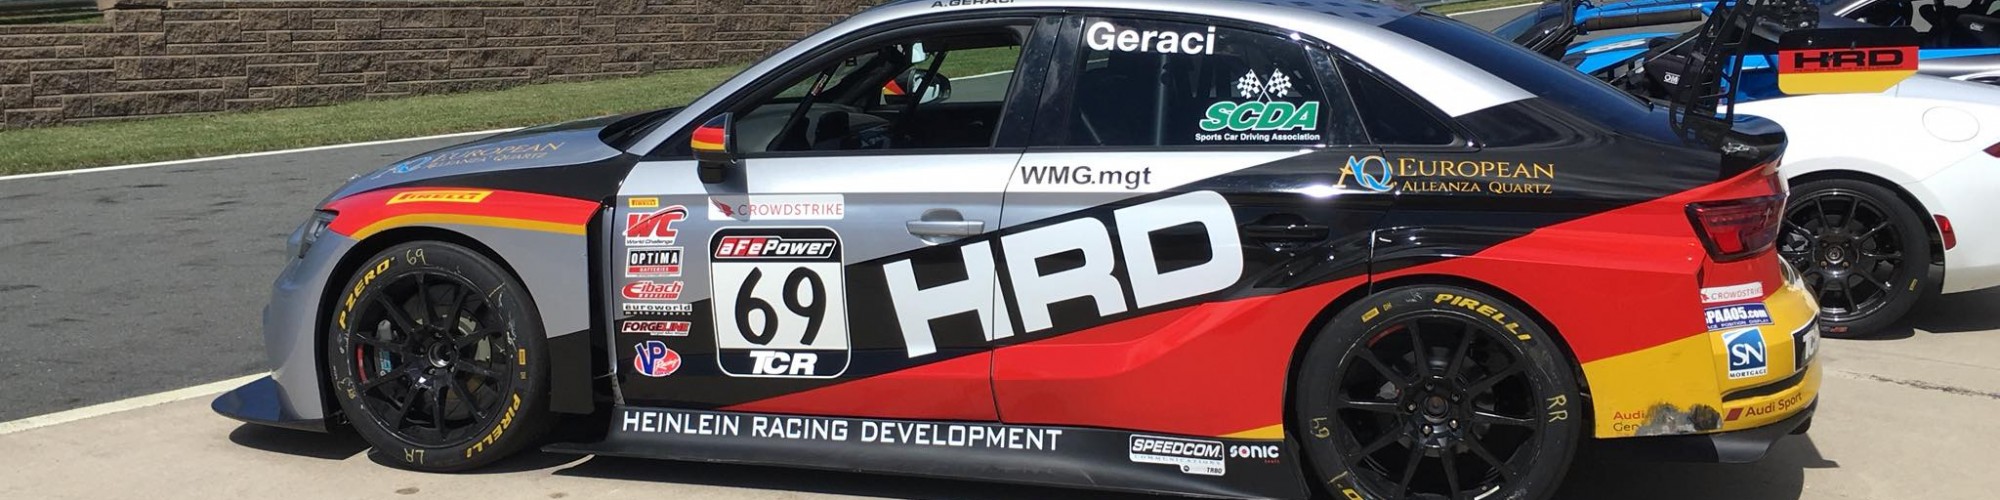 Heinlein Racing Development cover image